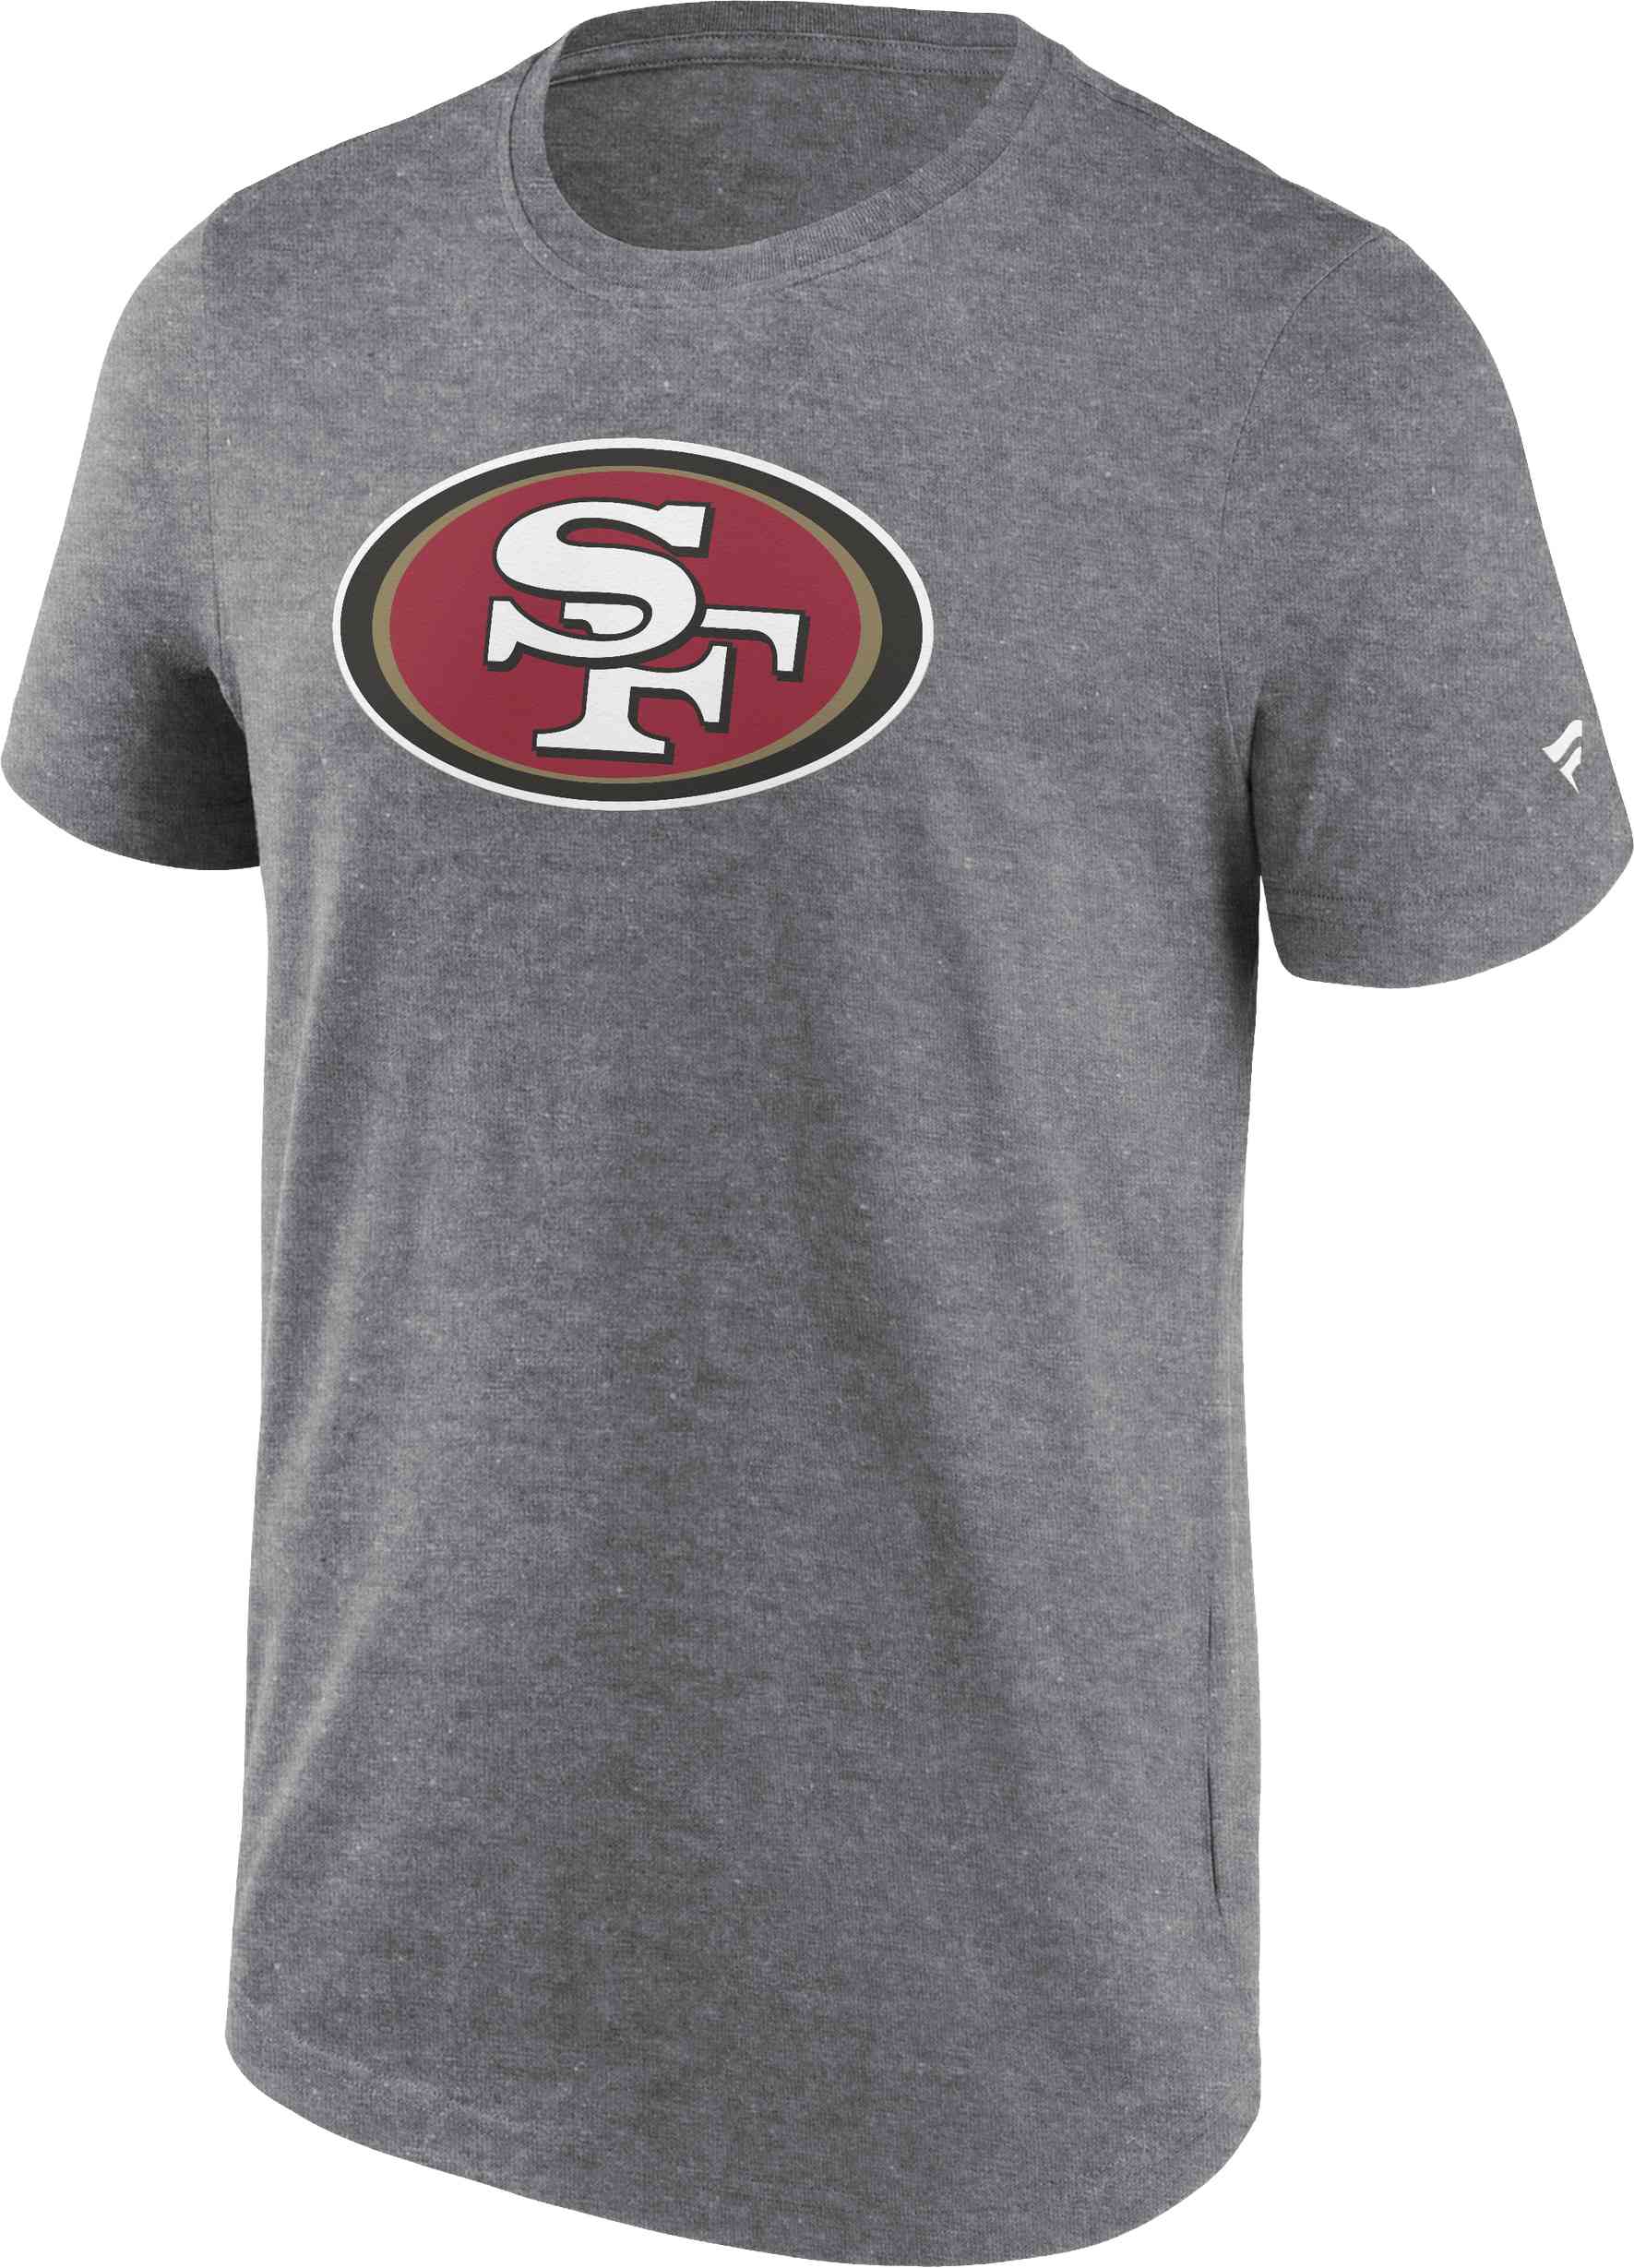 Fanatics - NFL San Francisco 49ers Primary Logo Graphic T-Shirt